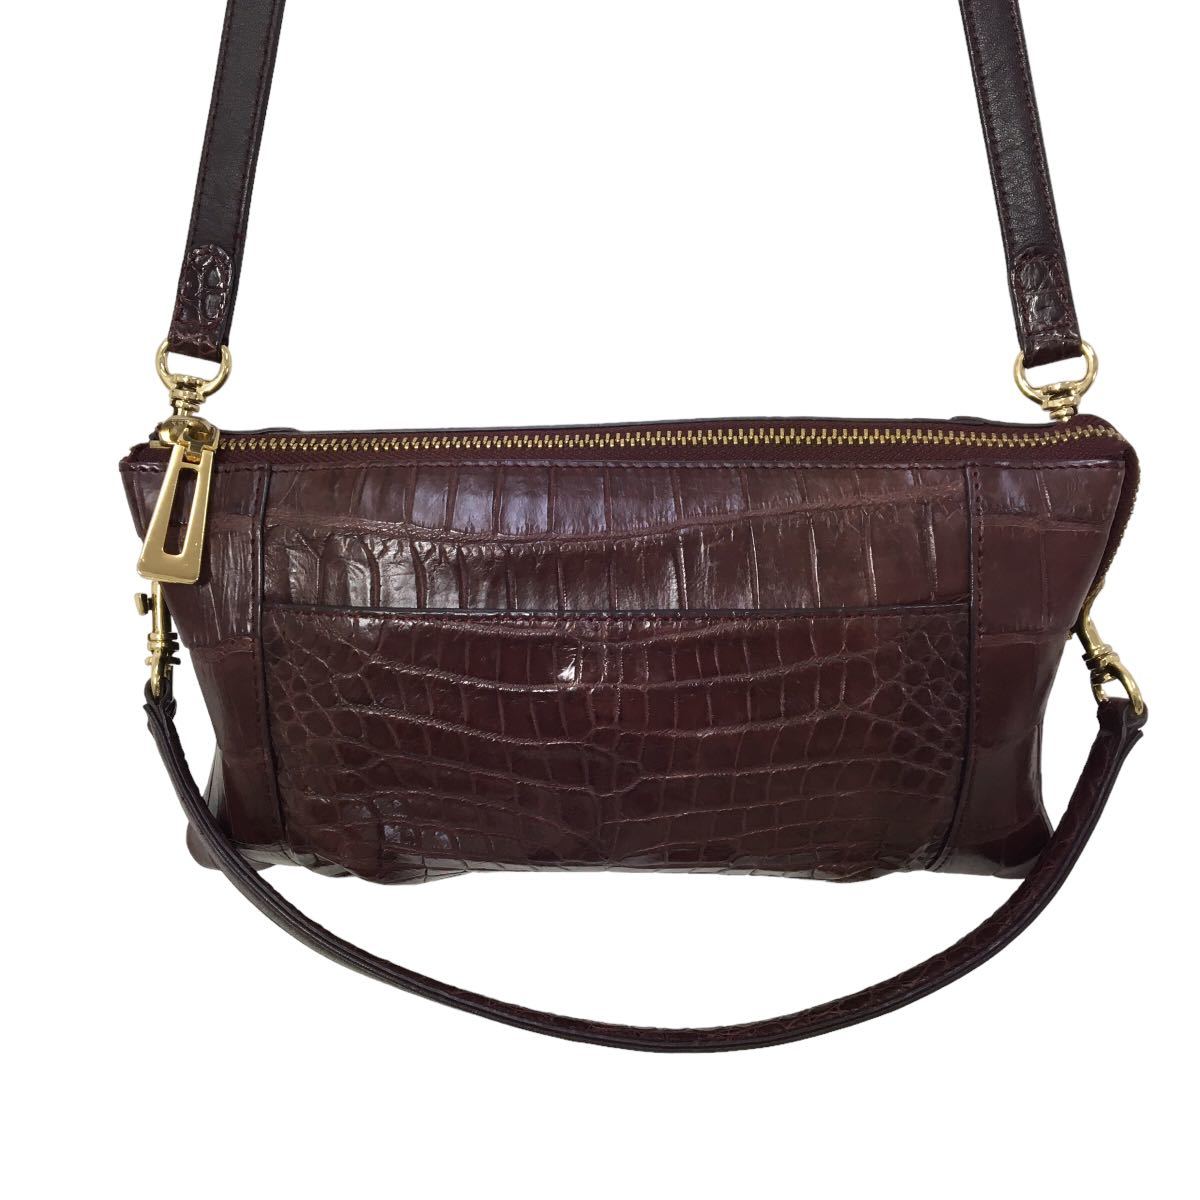 D491 クロコダイル クロコ 本革 レザー 皮革 ショルダーバッグ 肩掛け 斜め掛け かばん カバン 鞄 バッグ BAG ミニバッグ ブラウン系の画像2